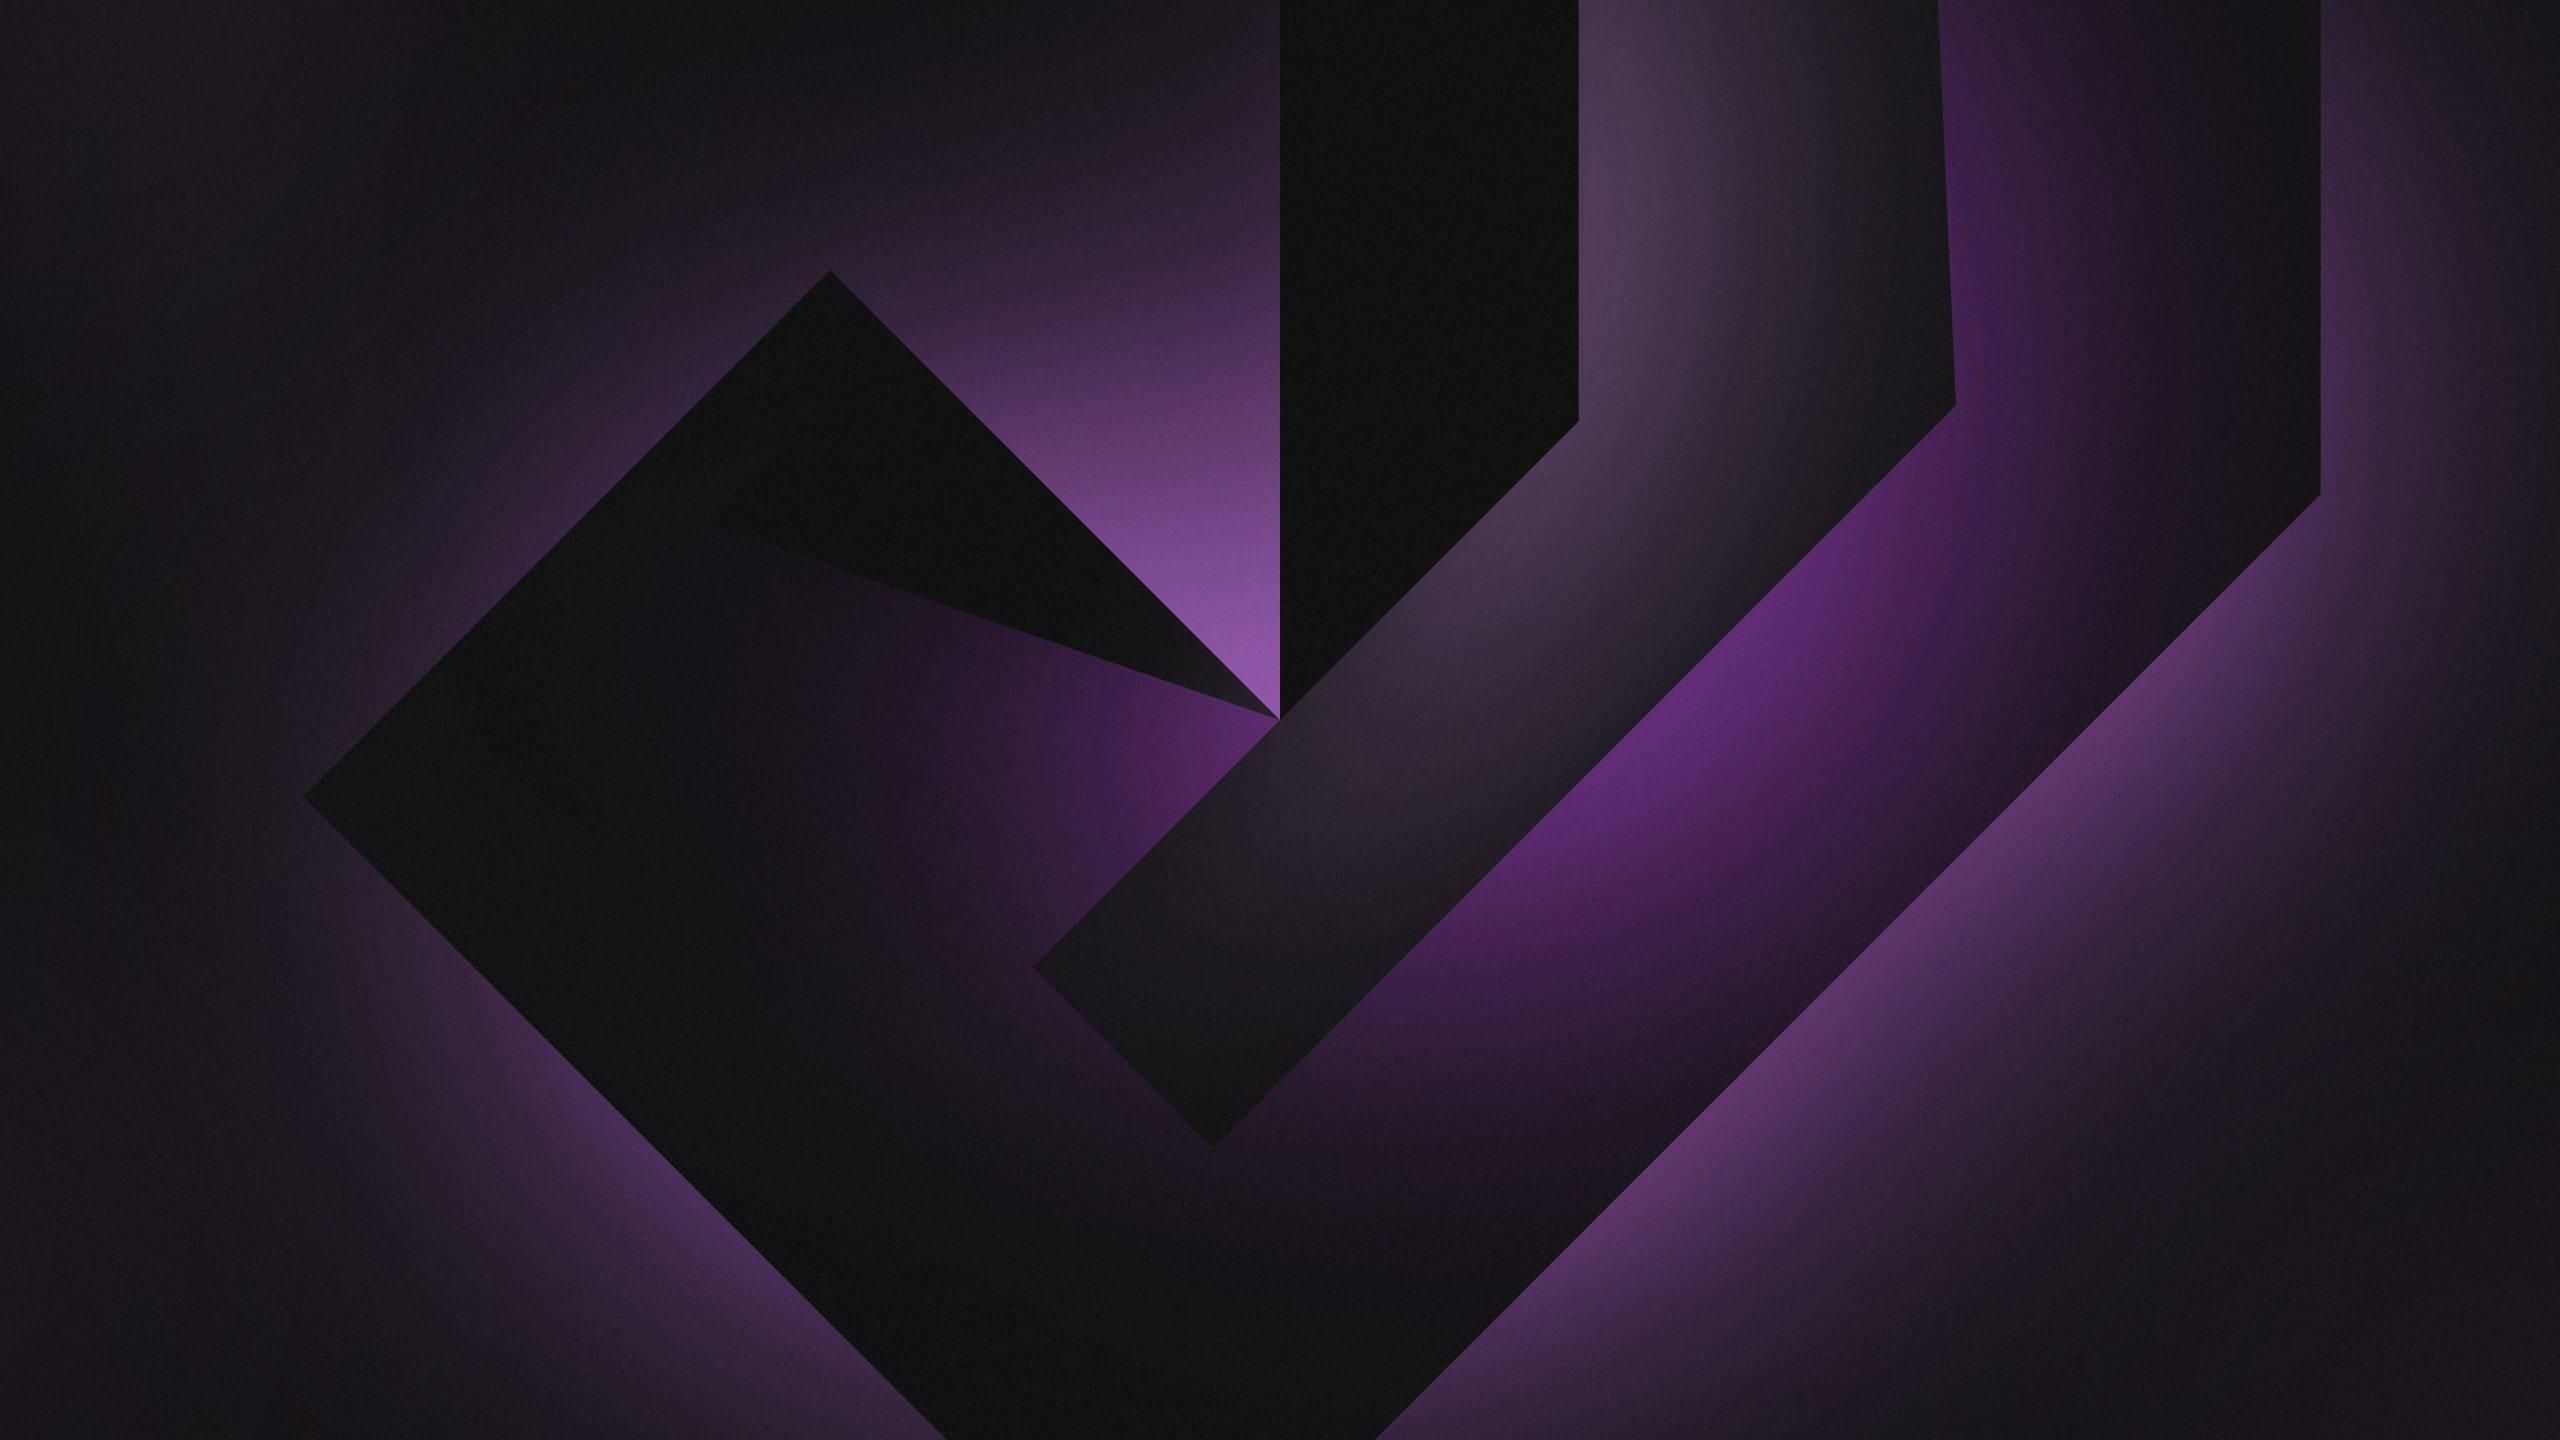 of Purple 4K wallpaper for your desktop or mobile screen